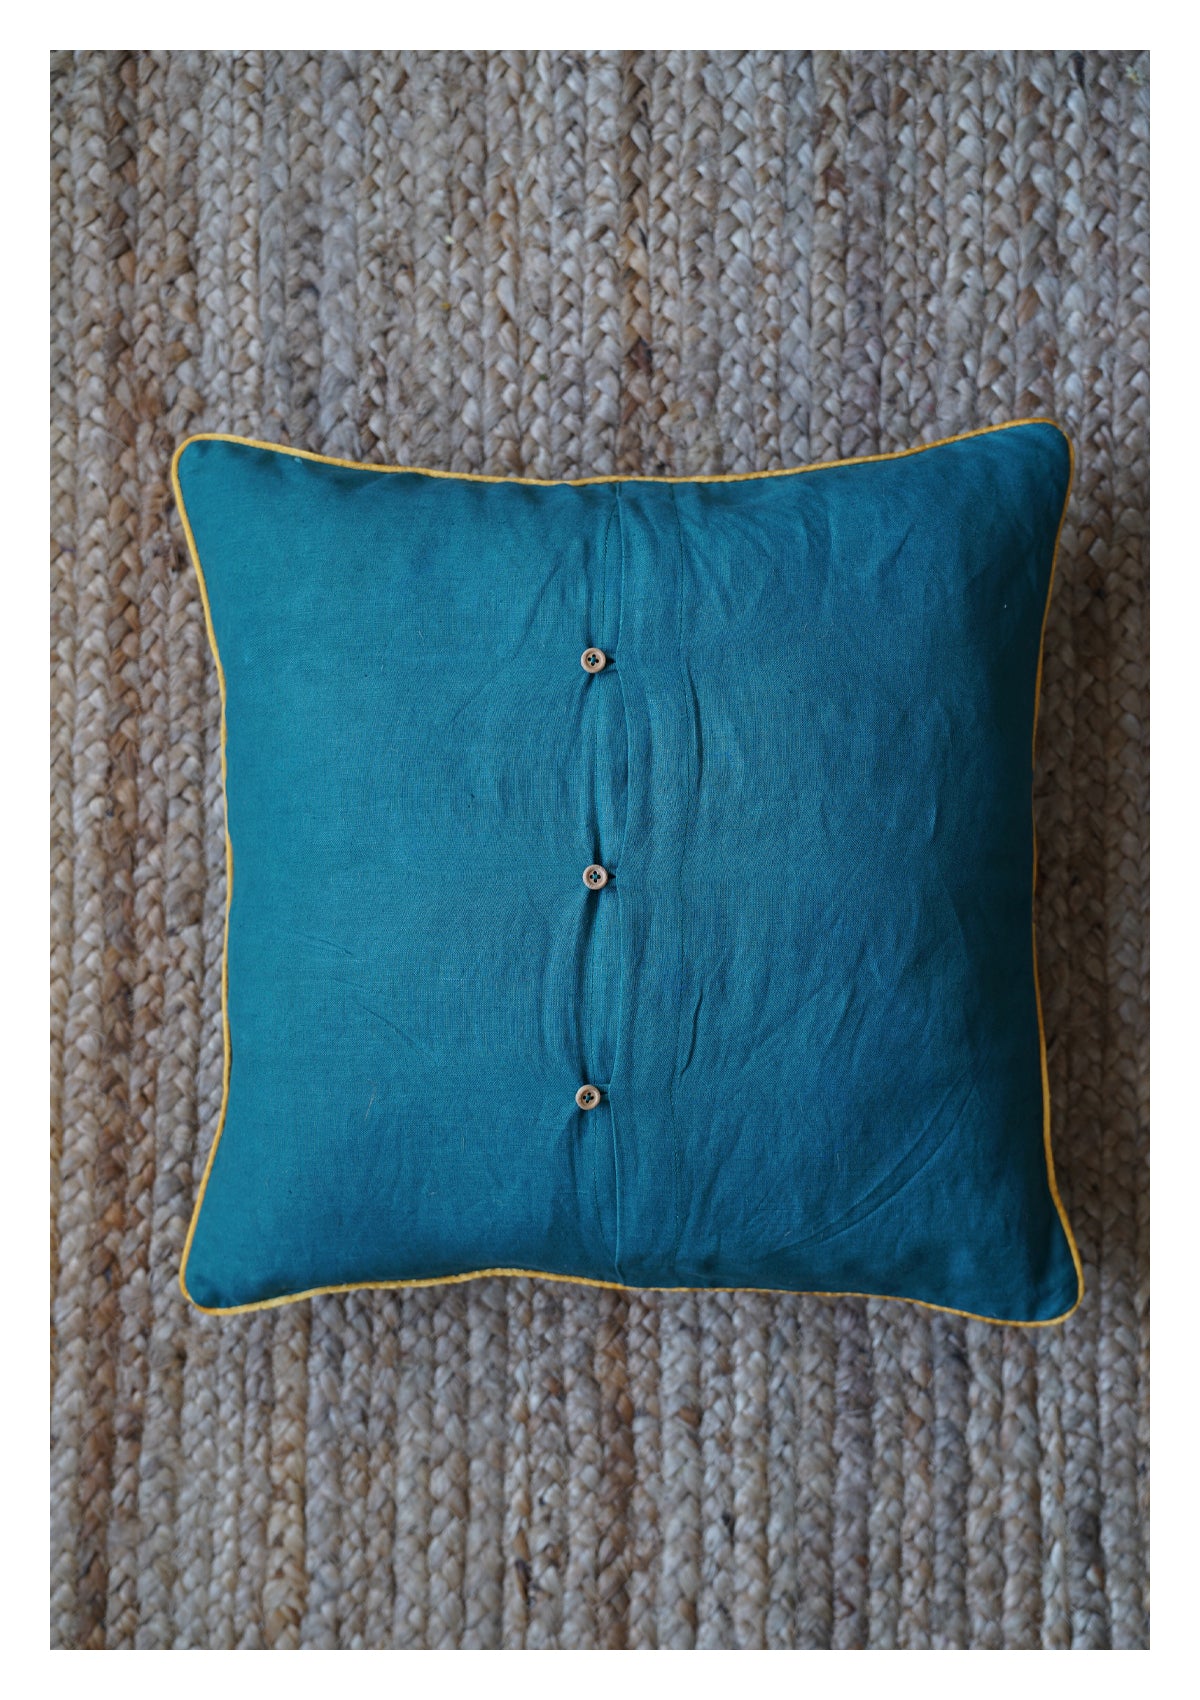 Loriini Teal Linen Cushion Cover